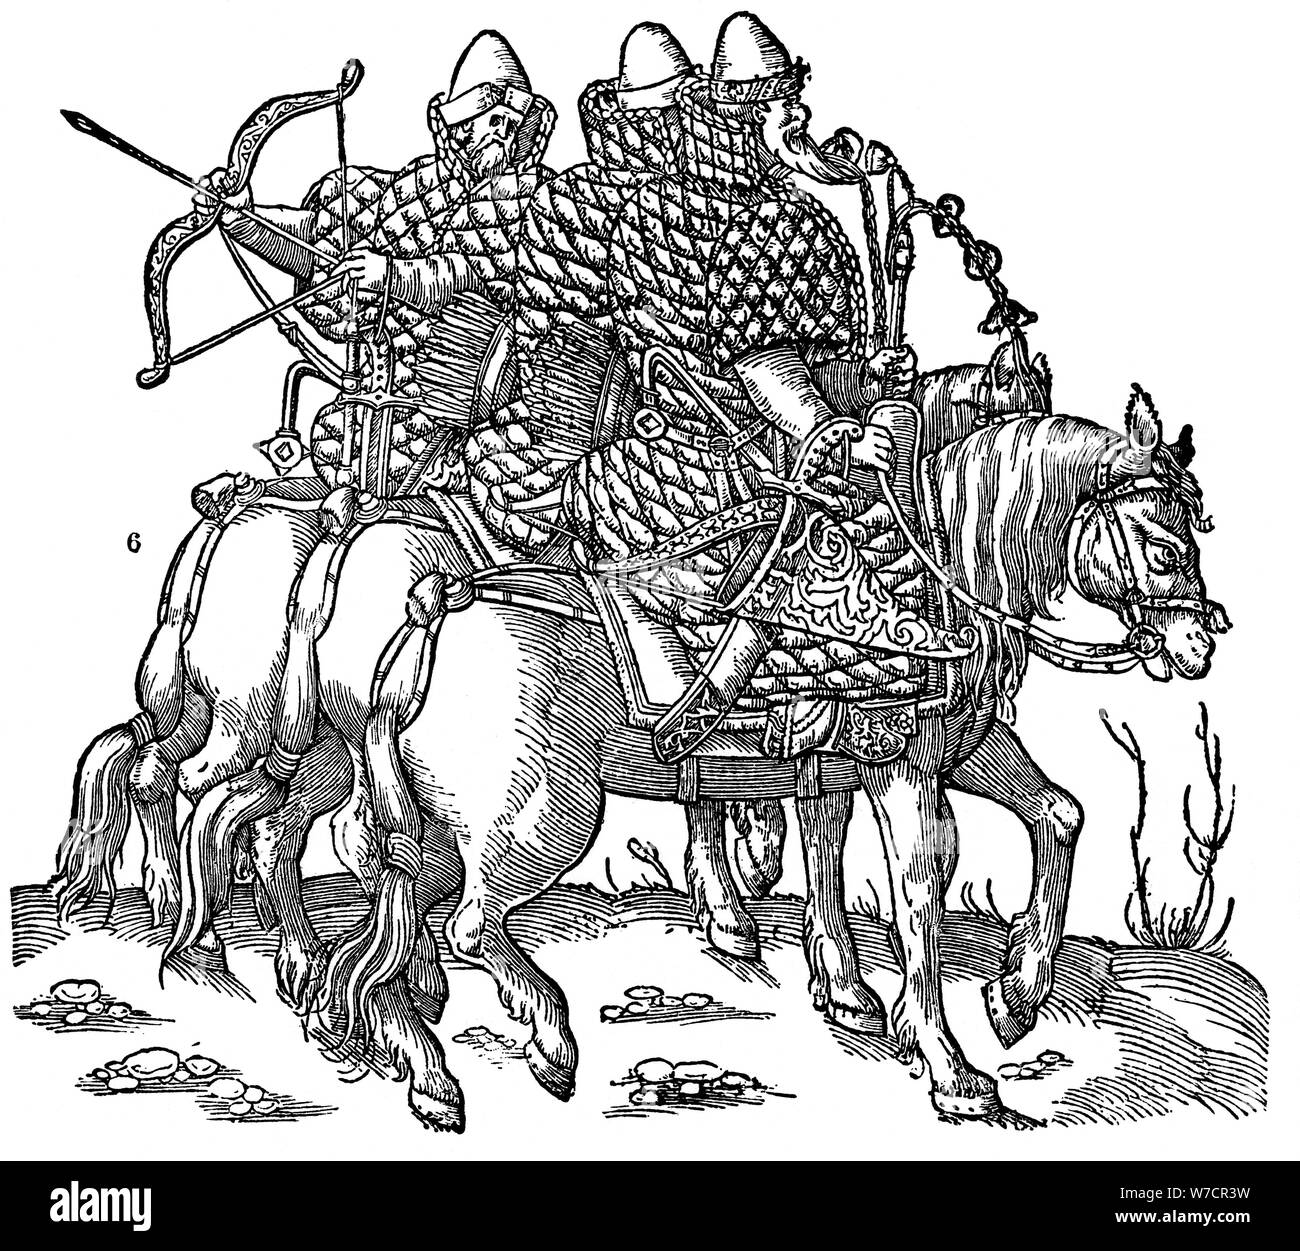 mounted-muscovite-warriors-1556-artist-unknown-stock-photo-alamy